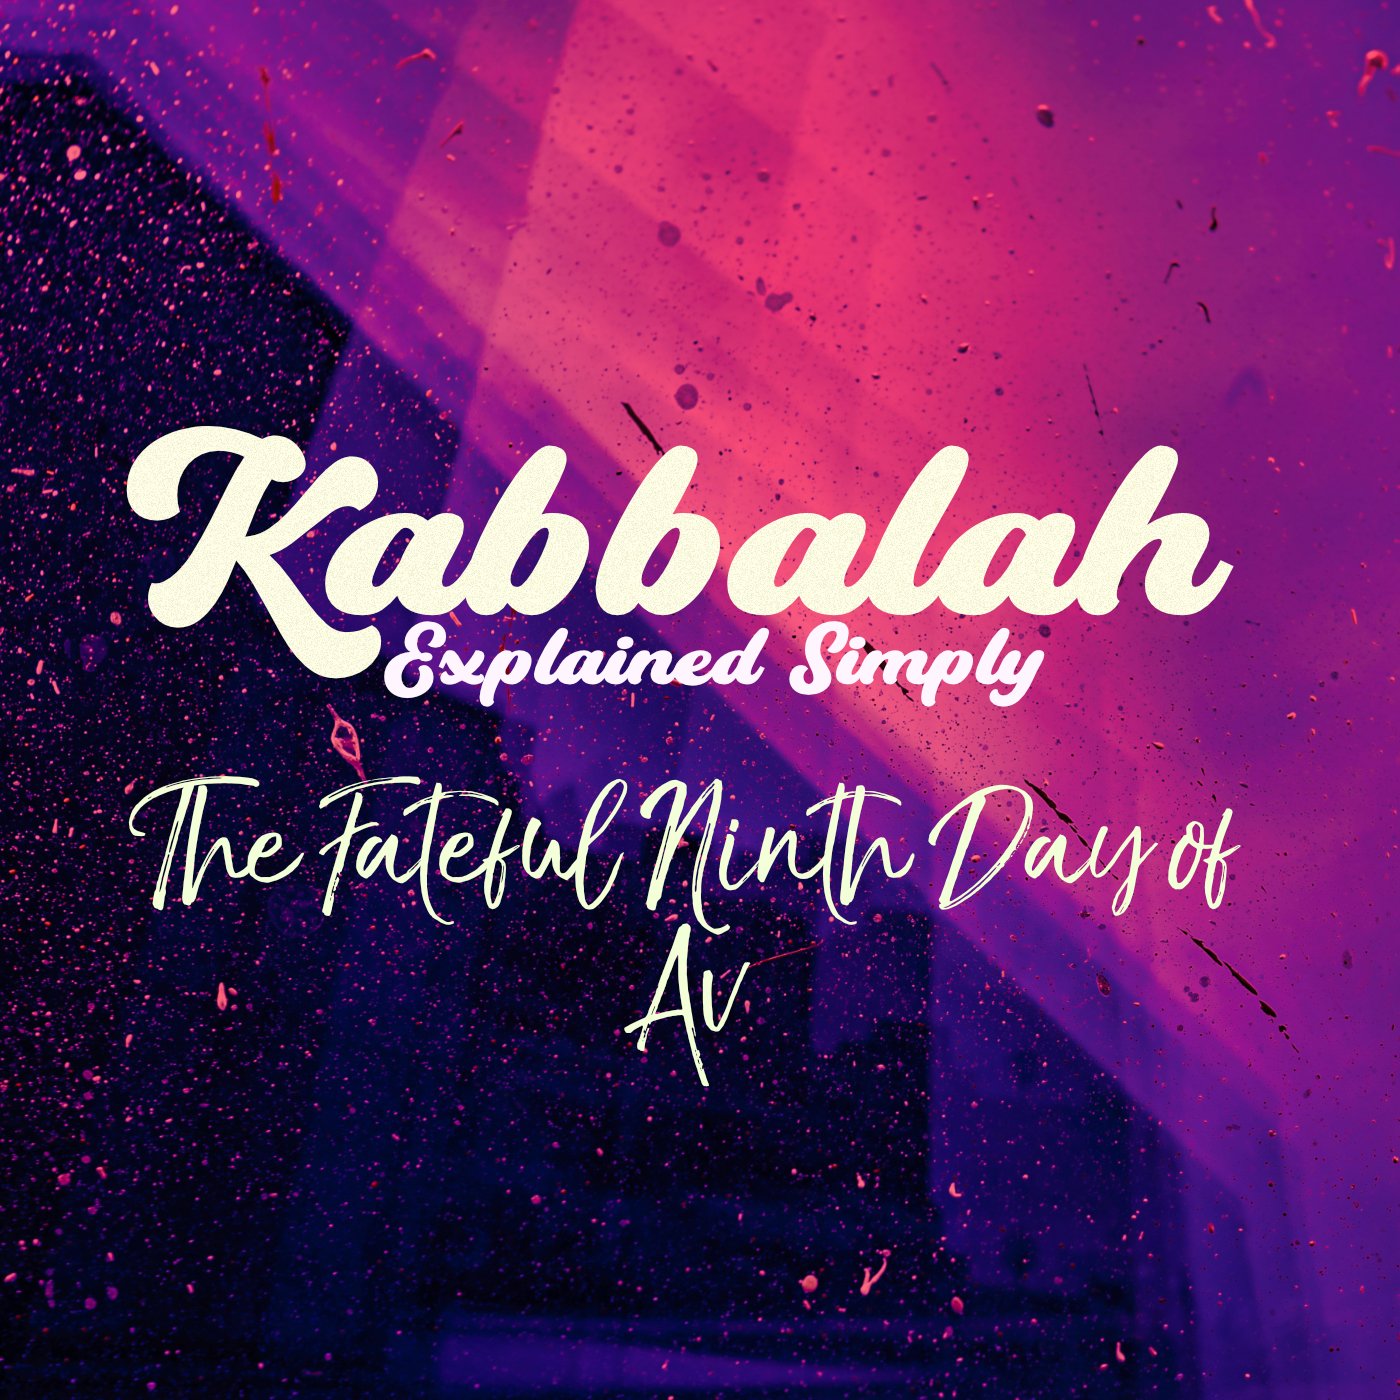 Kabbalah Explained Simply - The Fateful Ninth Day of Av According to Kabbalah